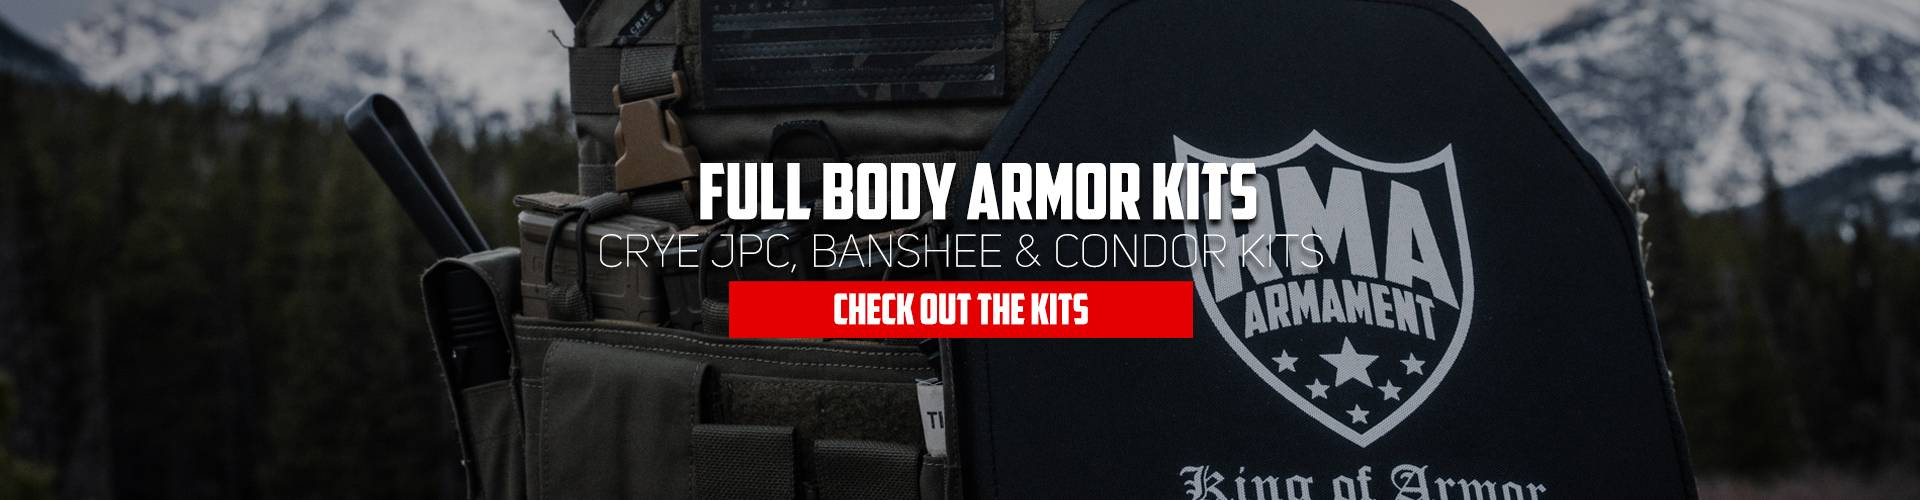 RMA Body Armor Kits